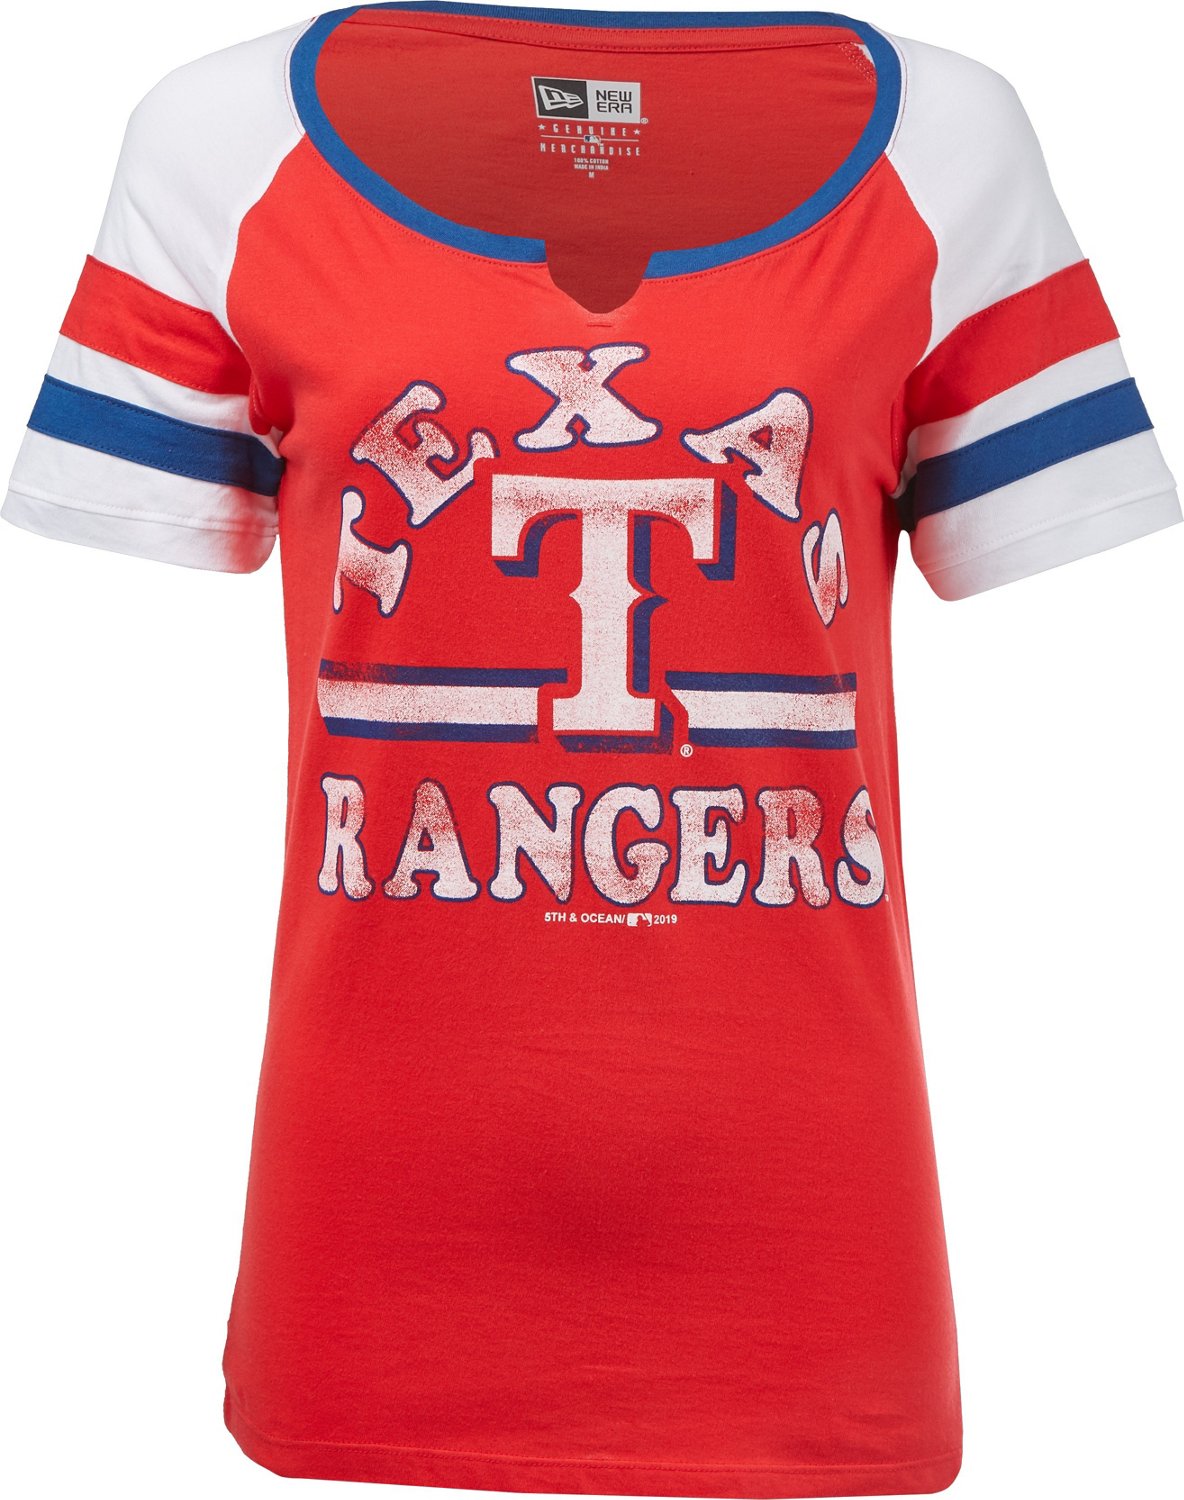 texas rangers jersey academy